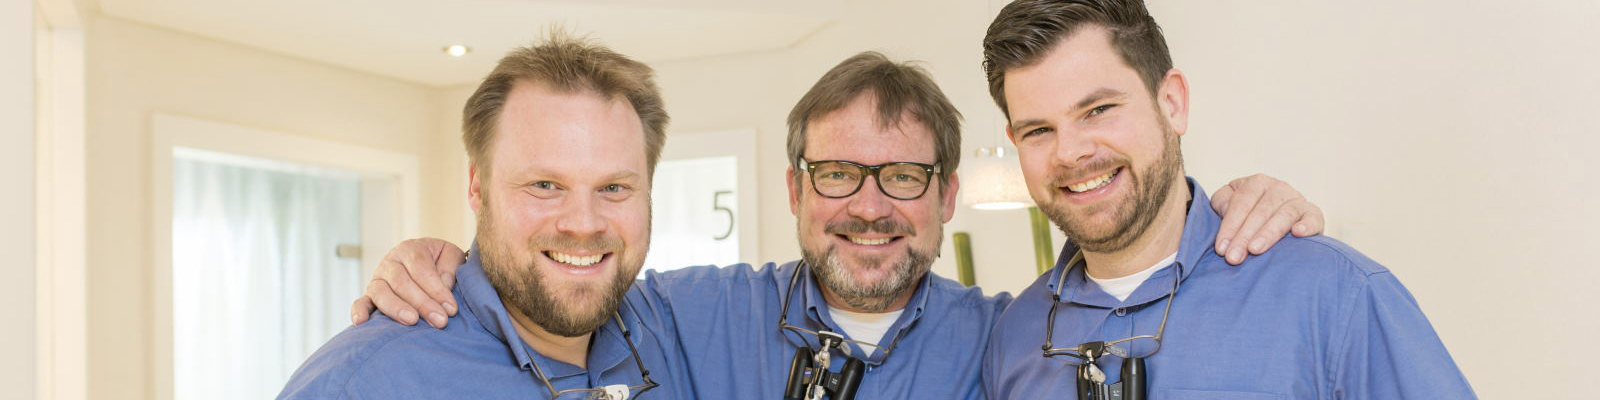 Zahnarzt Dr. Christian Schöler, Stephanus Schöler, Sascha Werner